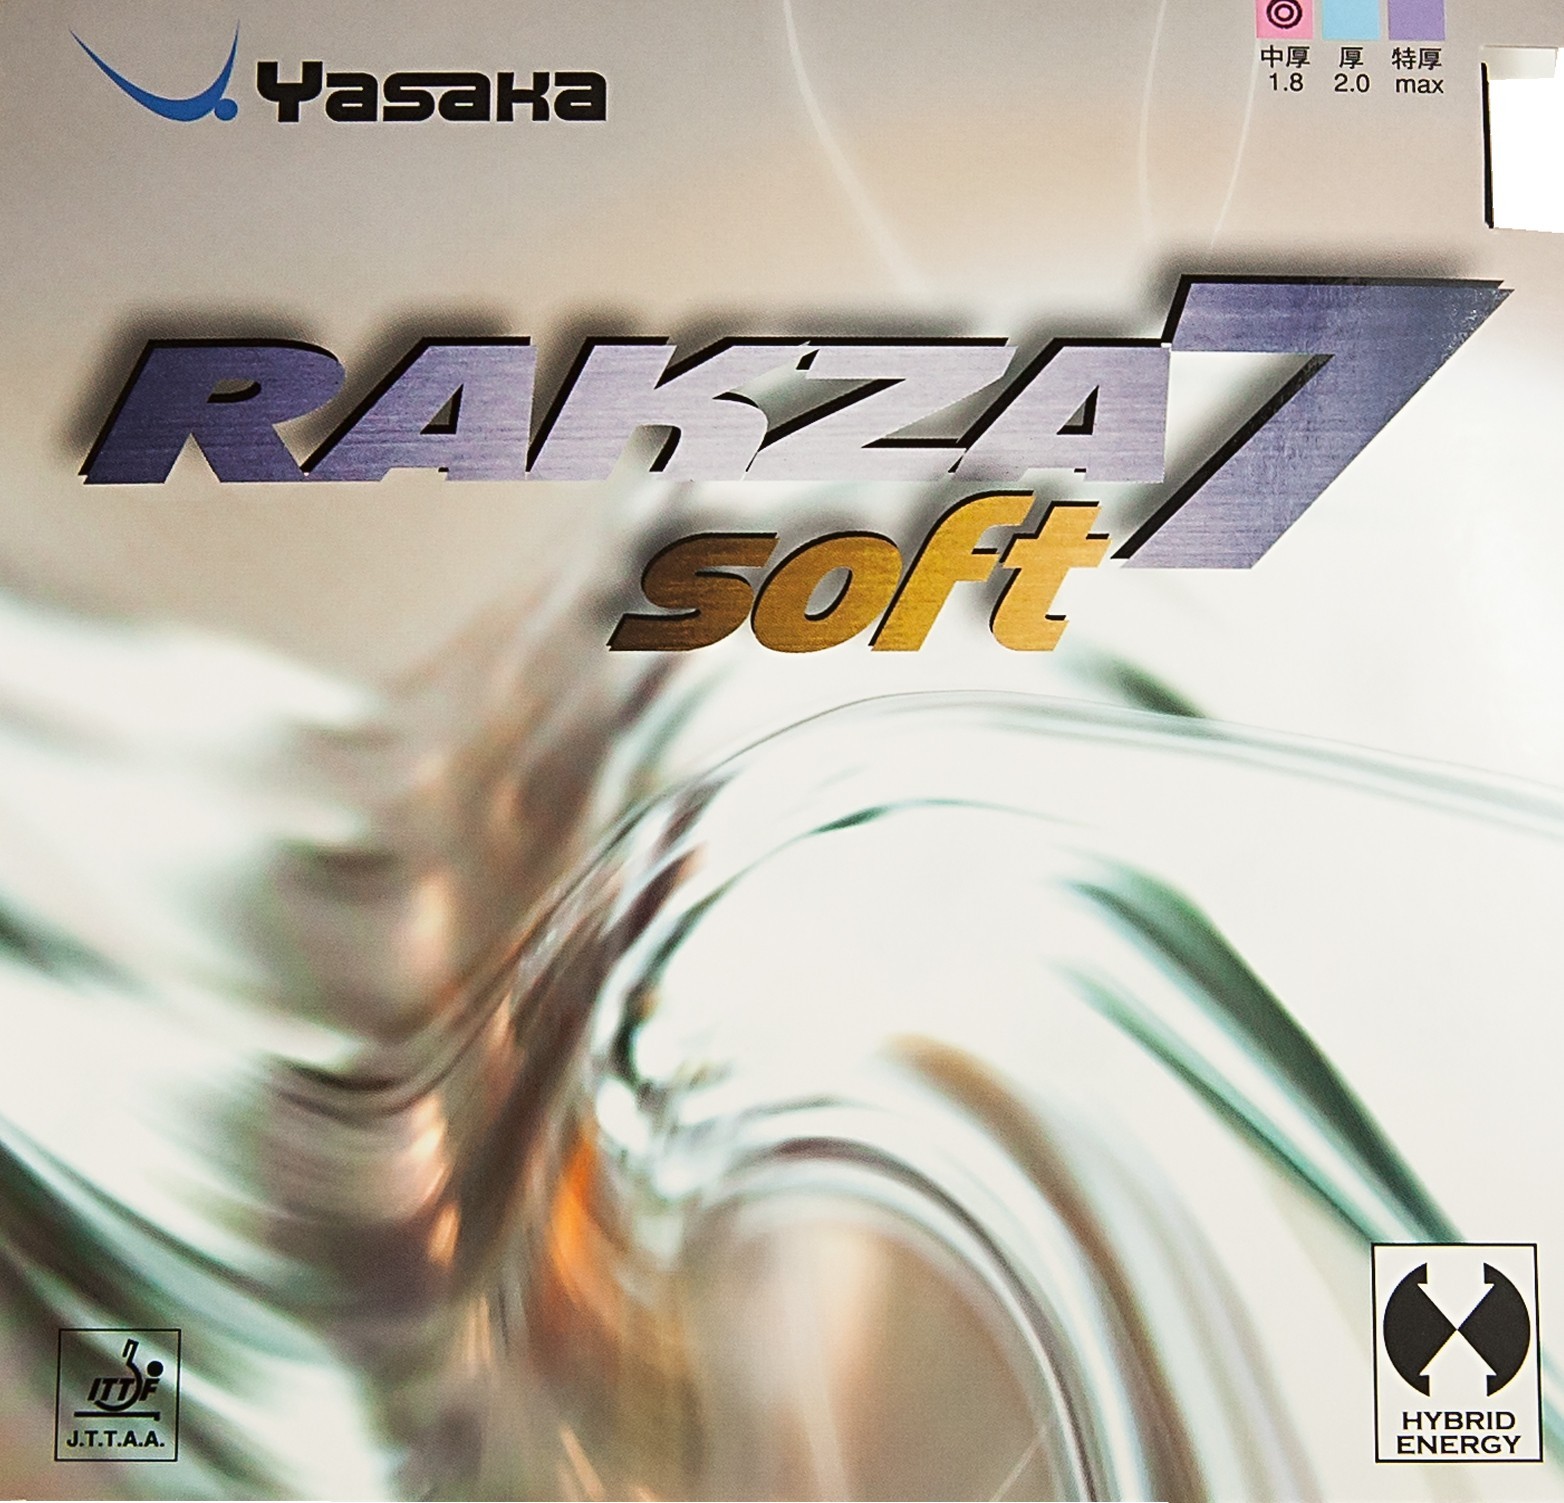 Yasaka - Rakza 7 Soft Barva: Červená, Tloušťka houby: max